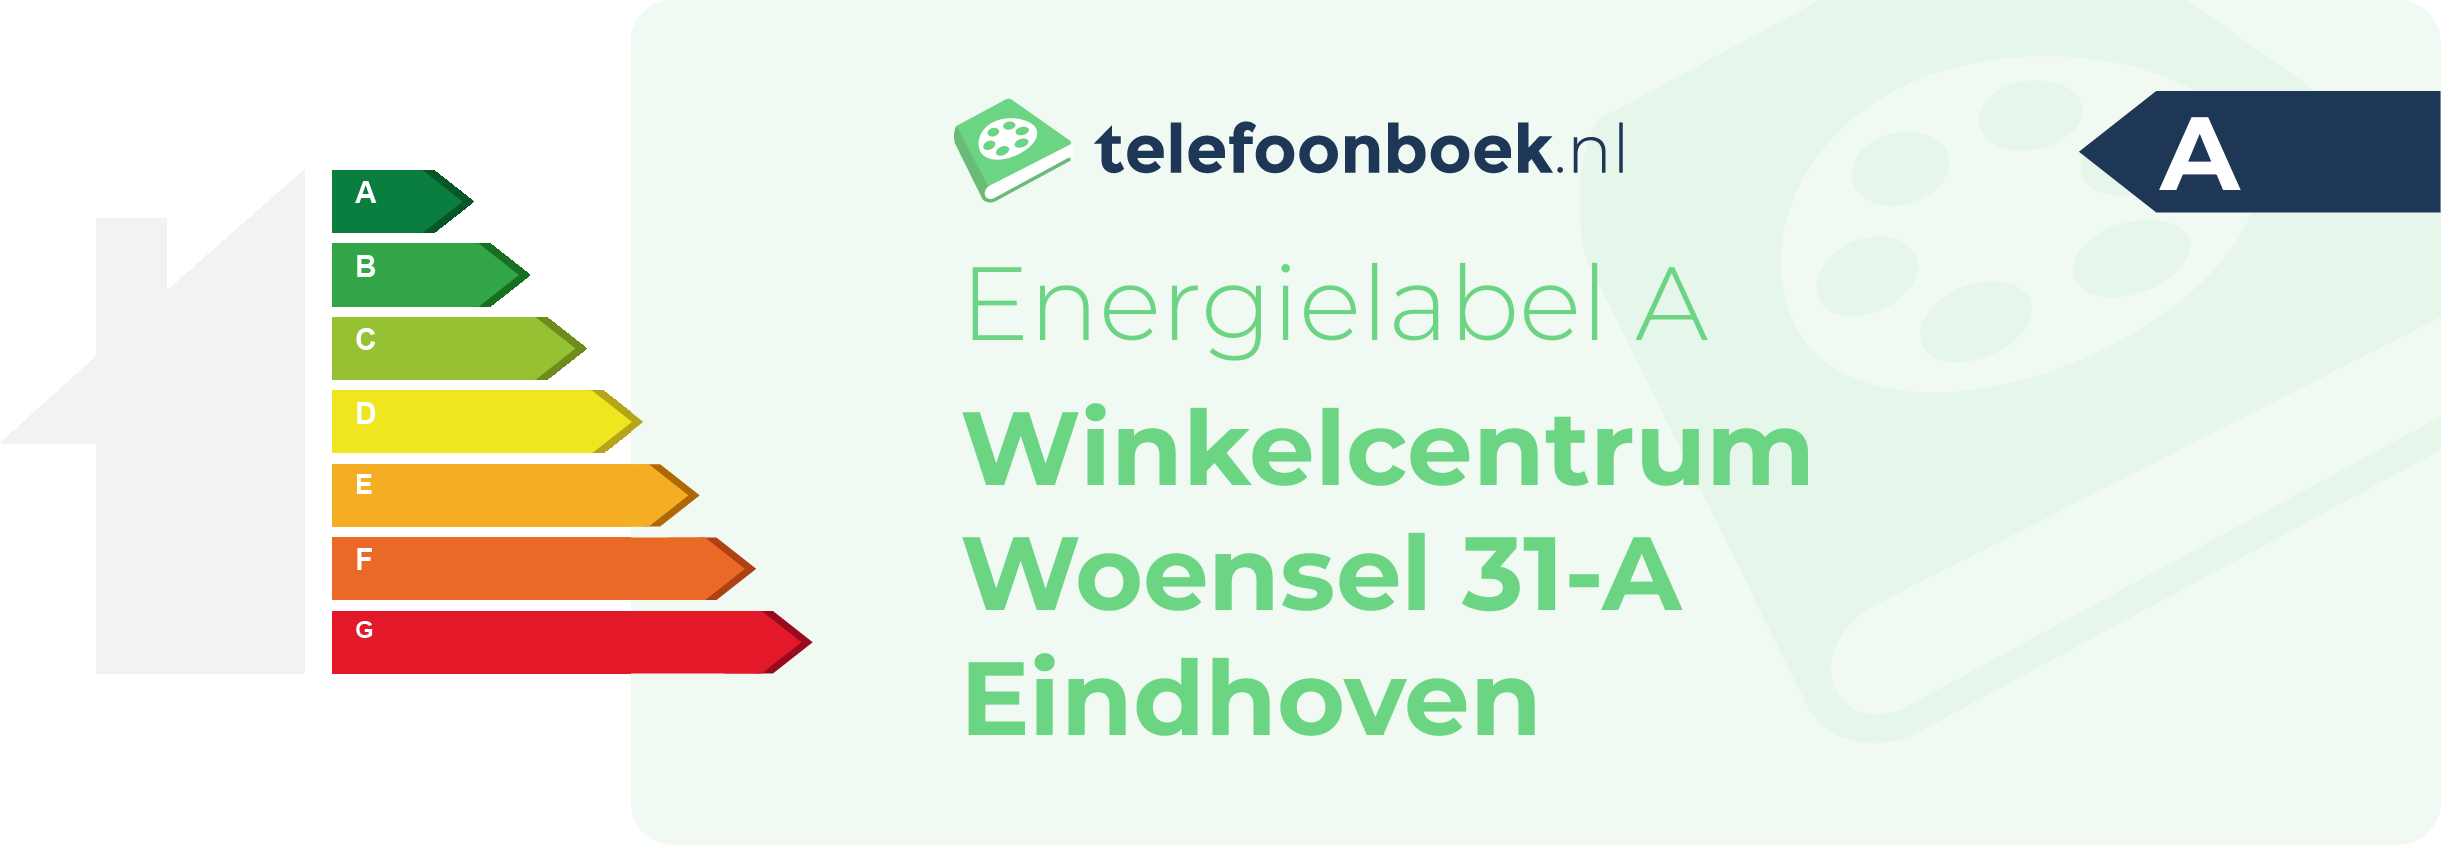 Energielabel Winkelcentrum Woensel 31-A Eindhoven